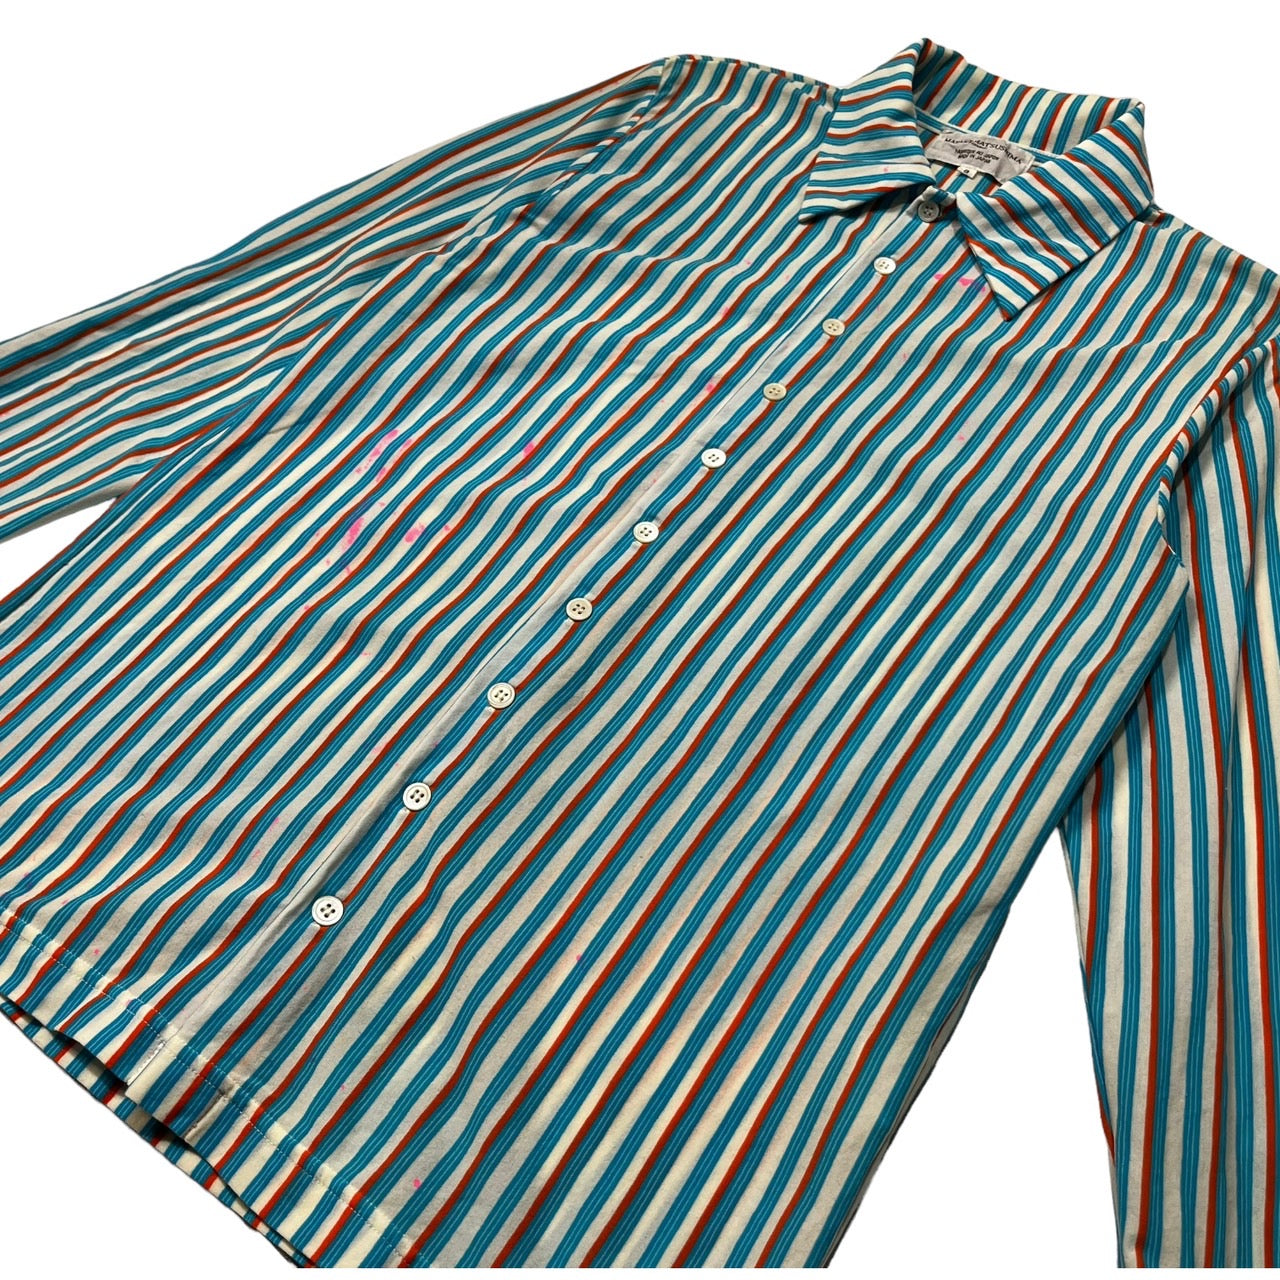 MASAKI MATSUSHIMA(マサキマツシマ) 00's Painted striped shirt ペンキ加工 ストレッチ ストライプシャツ  長袖 3(L程度) ホワイト×ブルー